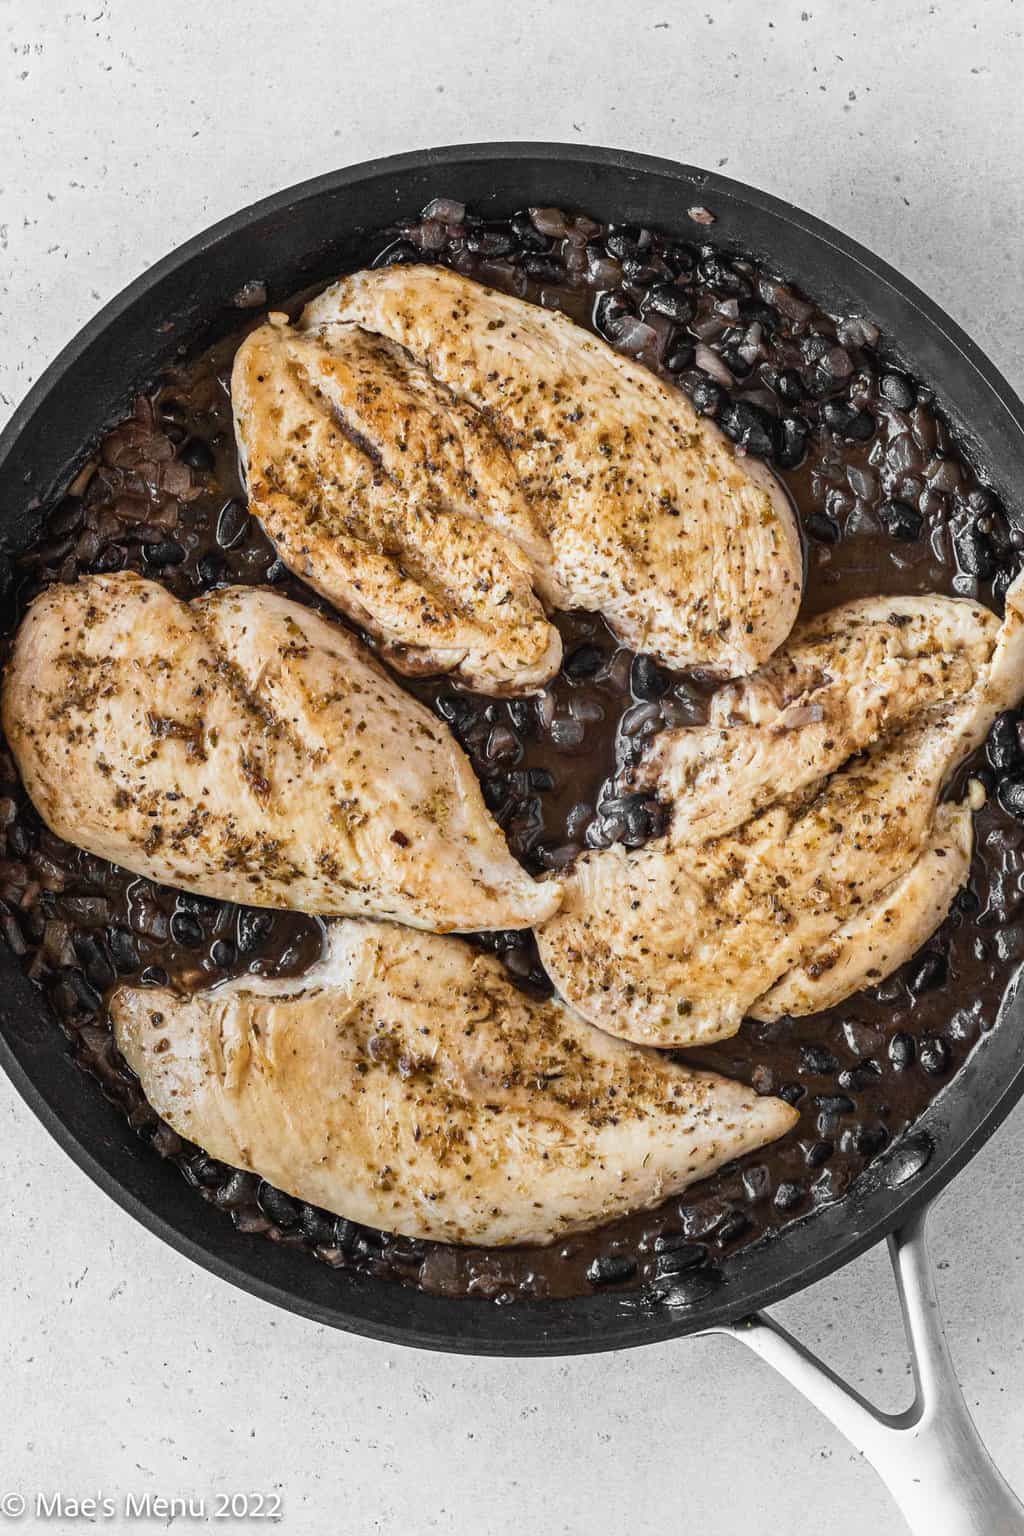 Chicken nestled in the black bean sauce.